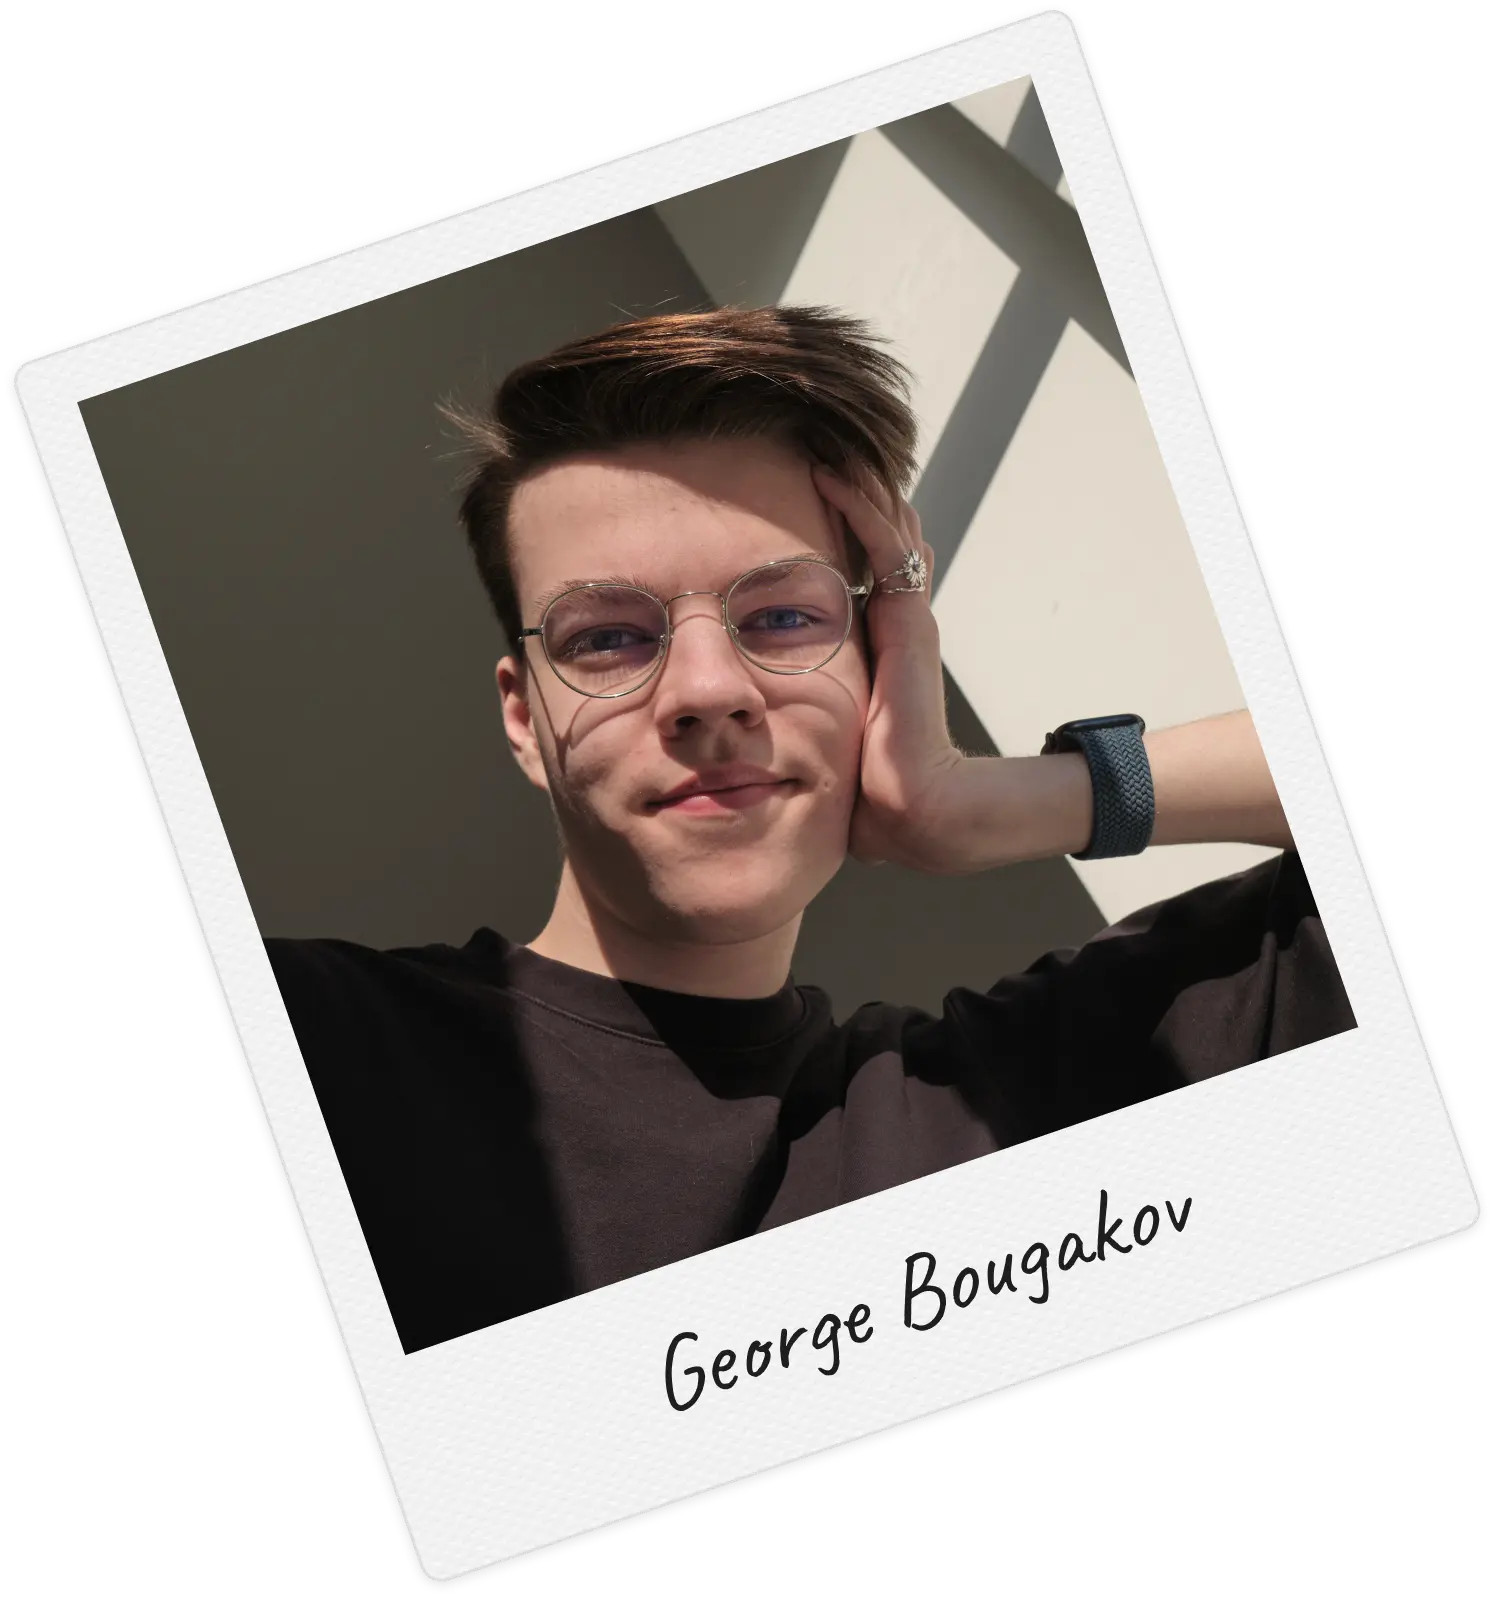 Several Polaroids showing George Bougakov